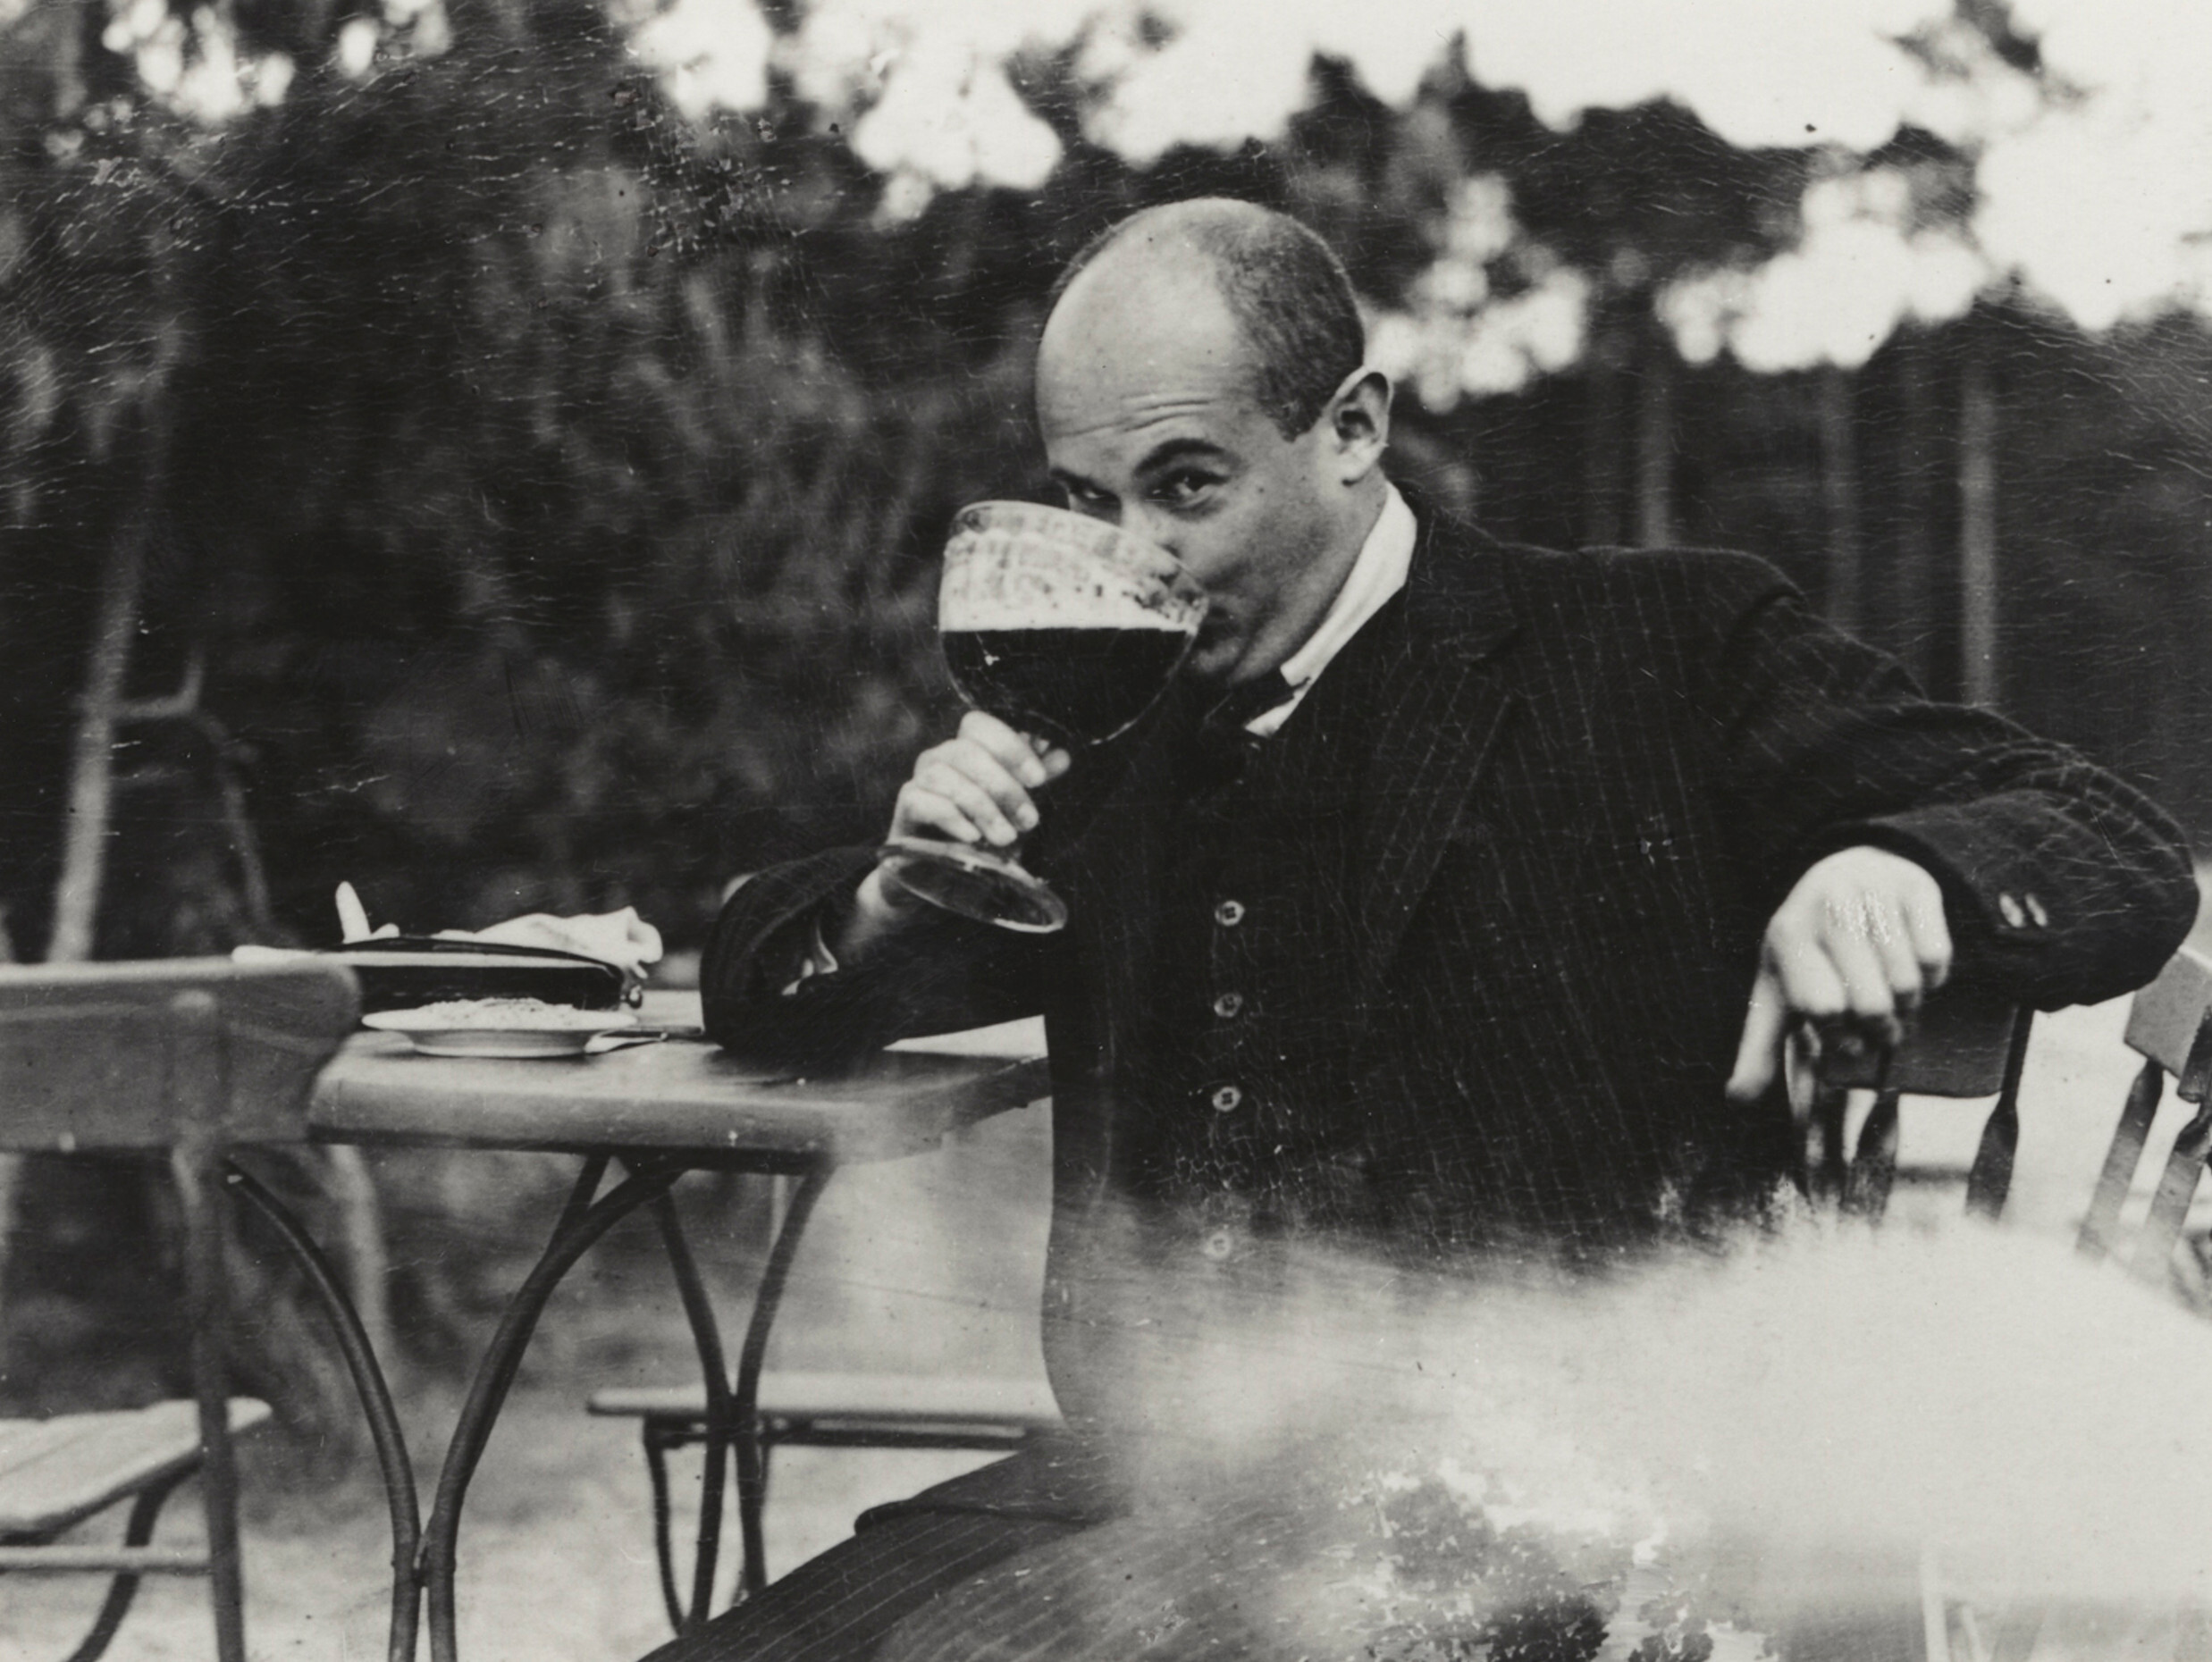 Роман Вишняк с пивной чашей, Берлин, ок. 1923 г. Фотограф Роман Вишняк